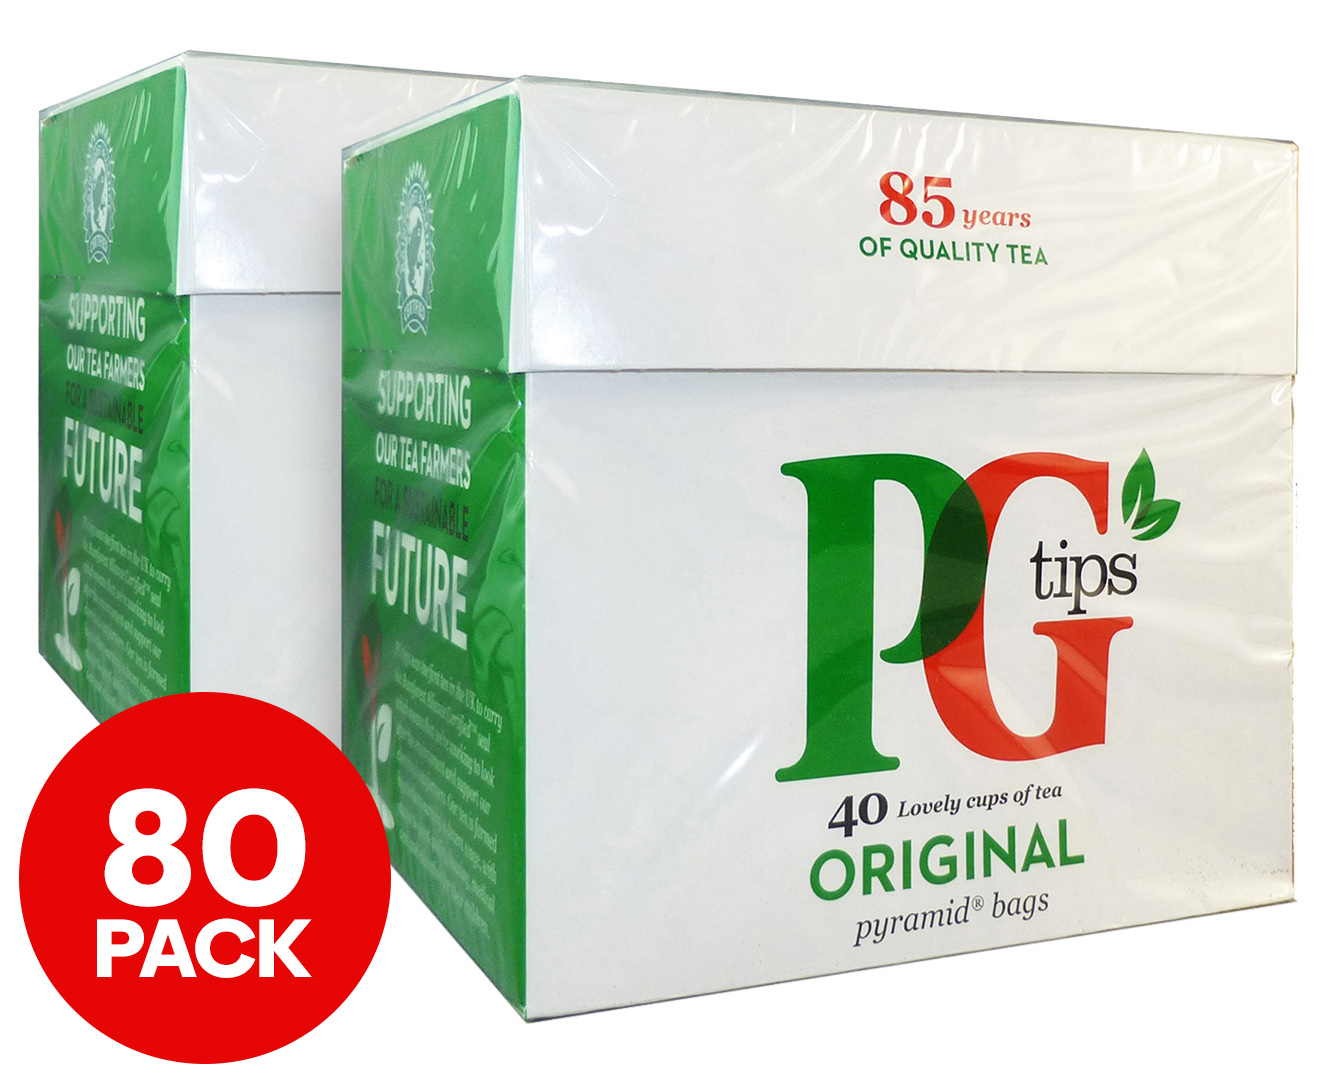 PG tips Original 160 Pyramid Tea bags.